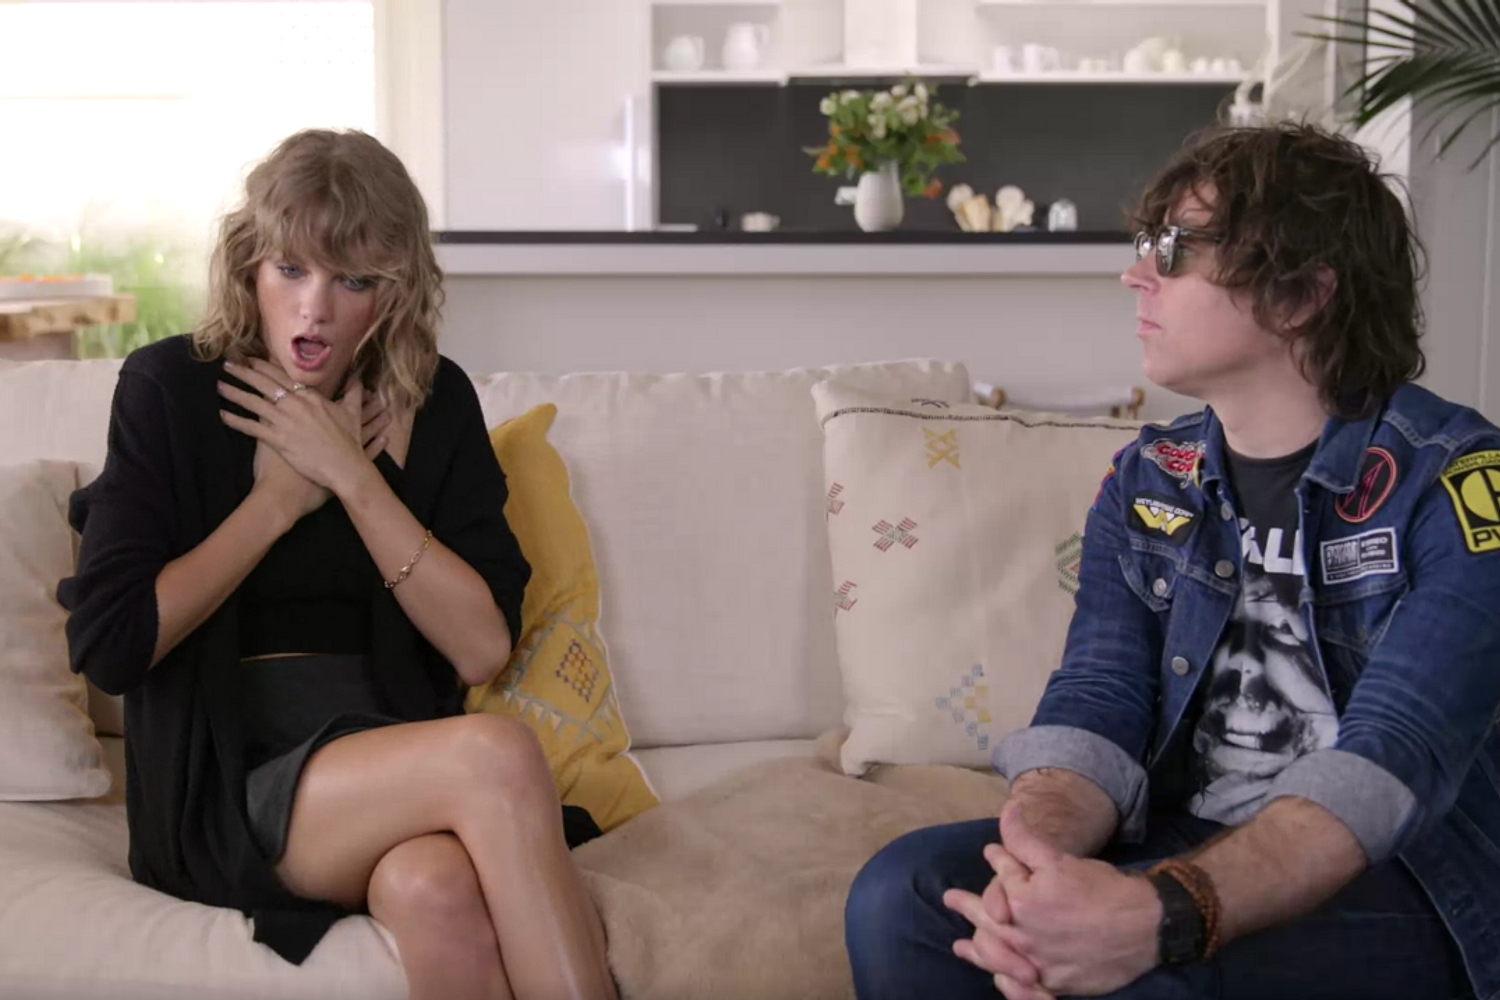 Watch Ryan Adams interview Taylor Swift (of course)